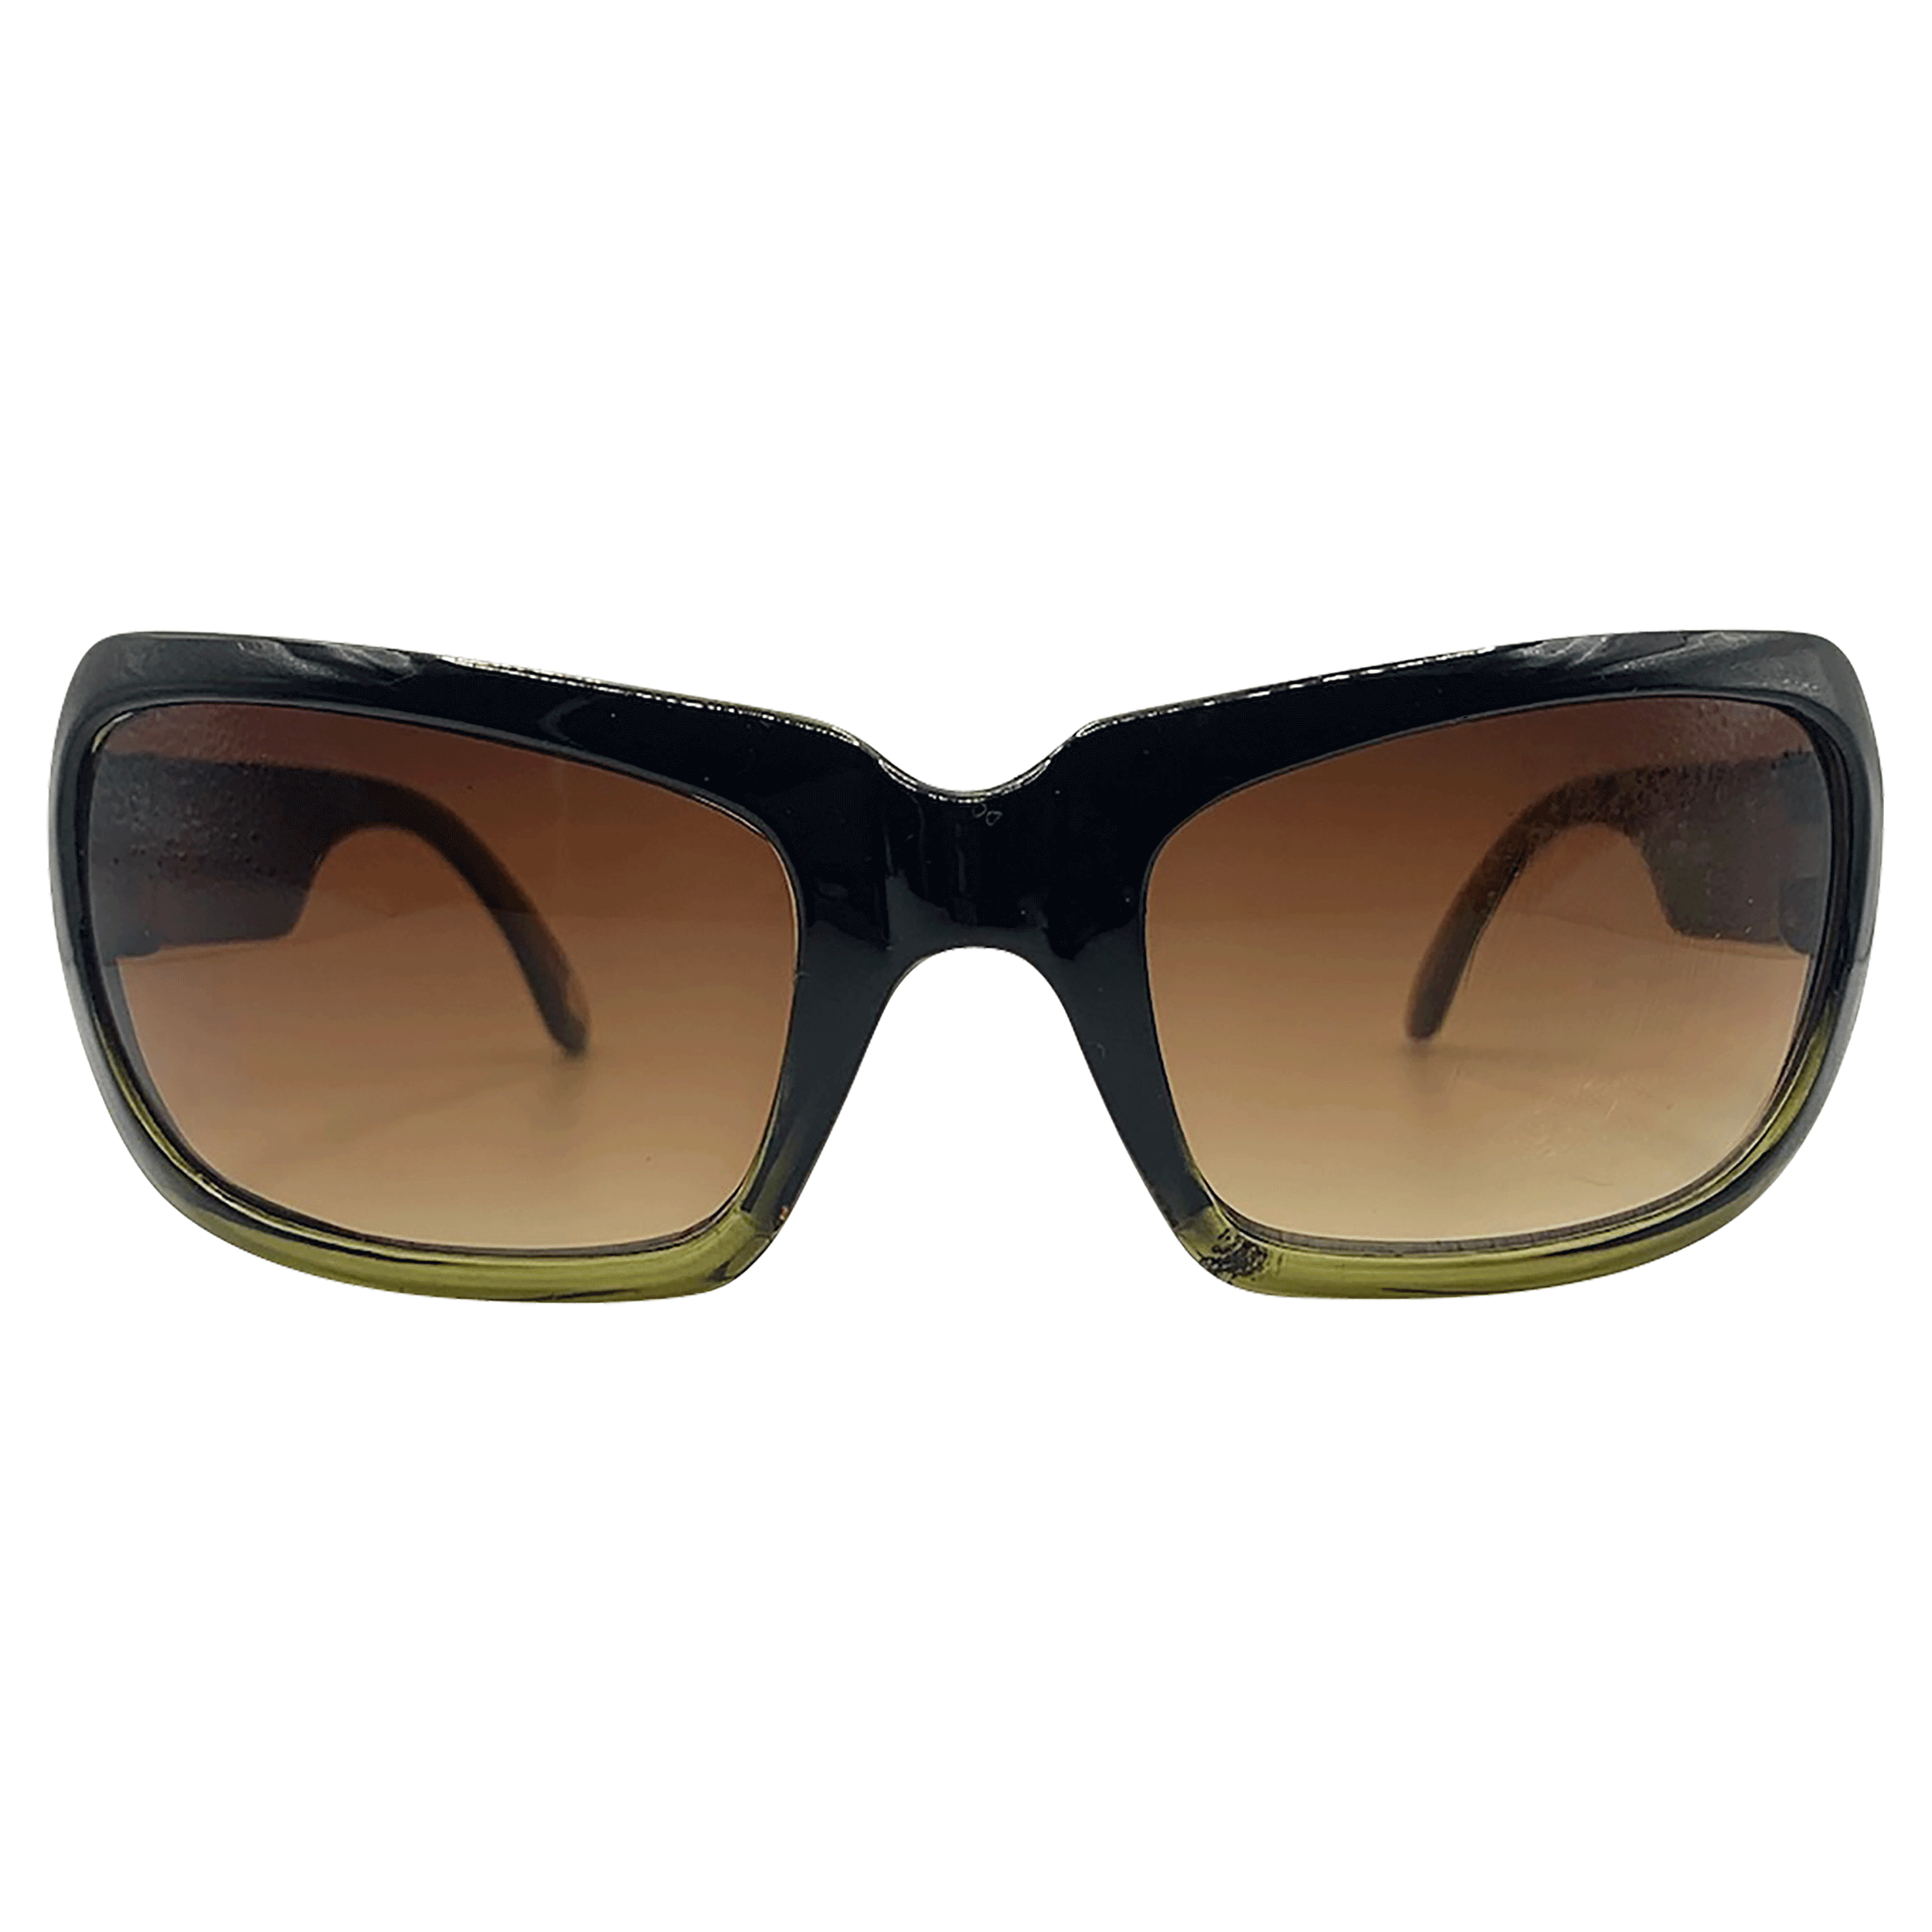 POSTINO Square Sports Sunglasses